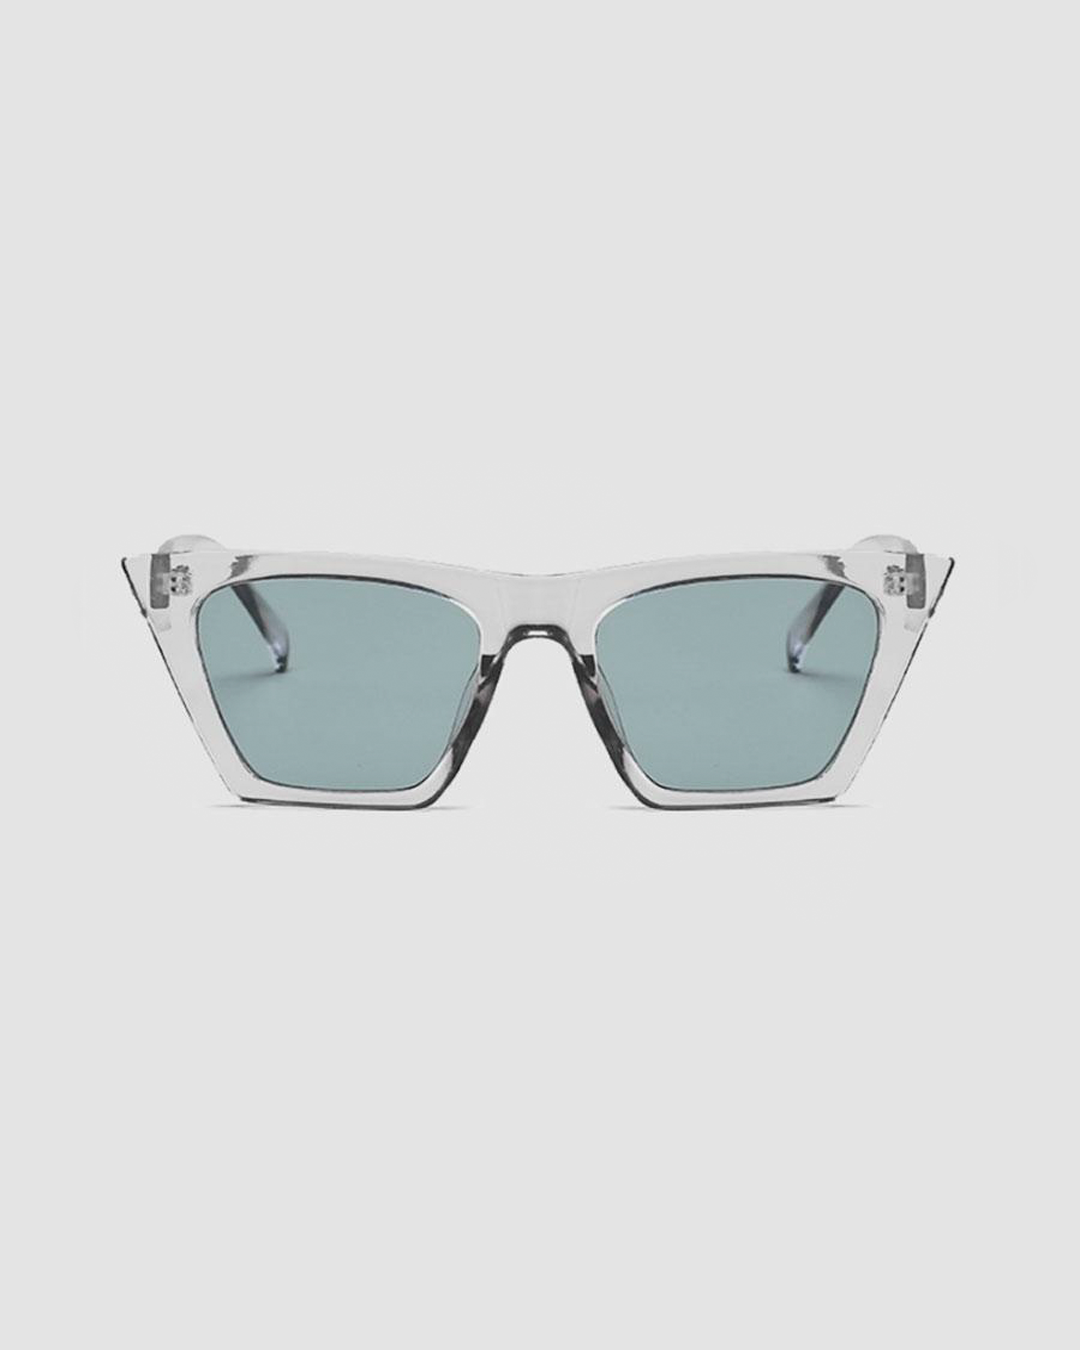 Hoover Sunglasses